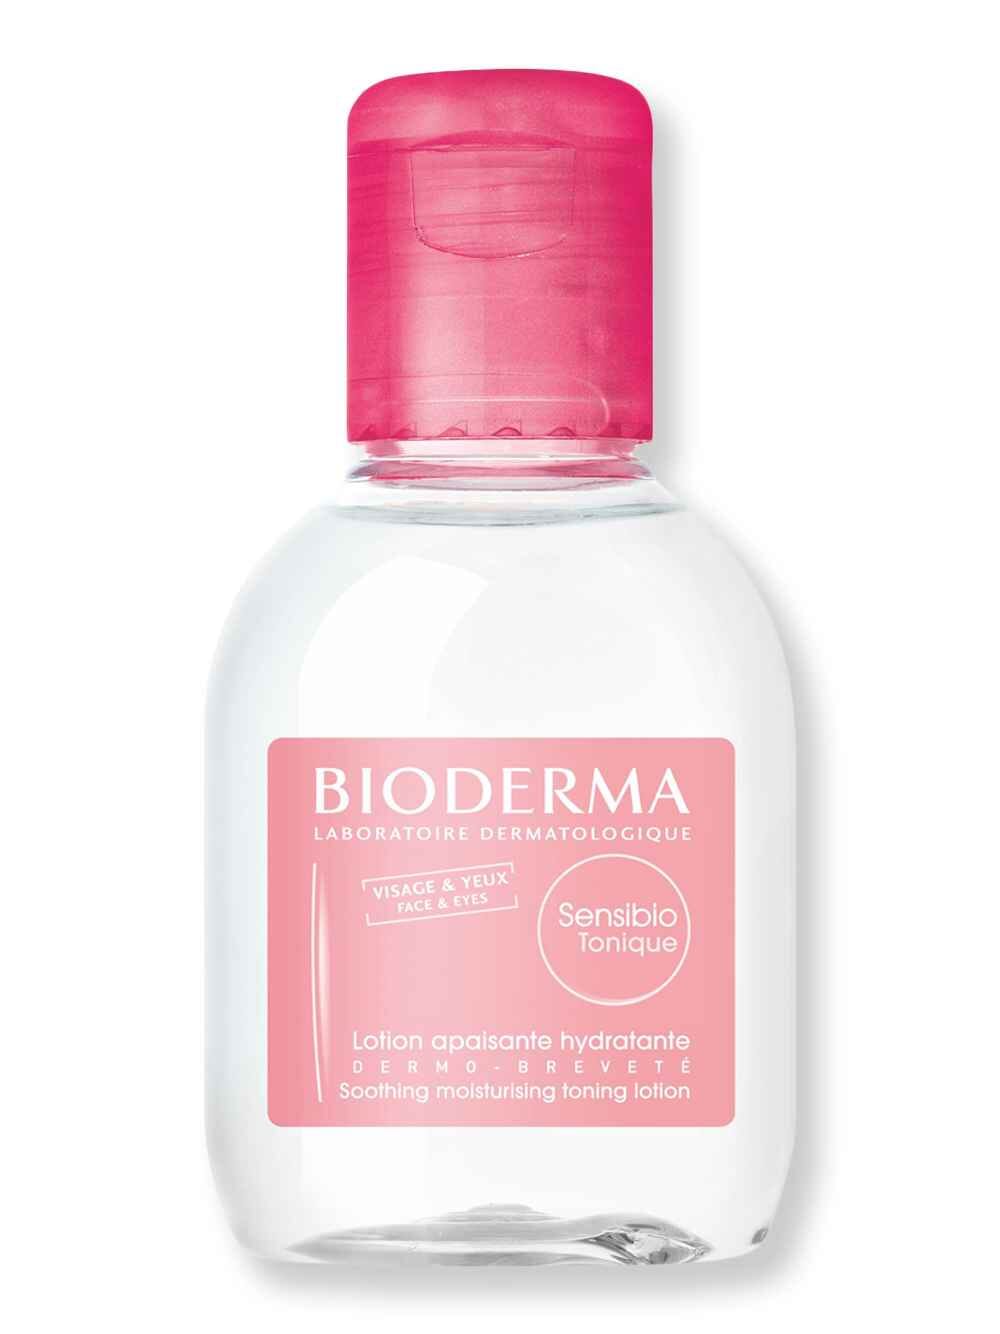 Bioderma Bioderma Sensibio Tonic Lotion 3.33 fl oz100 ml Toners 